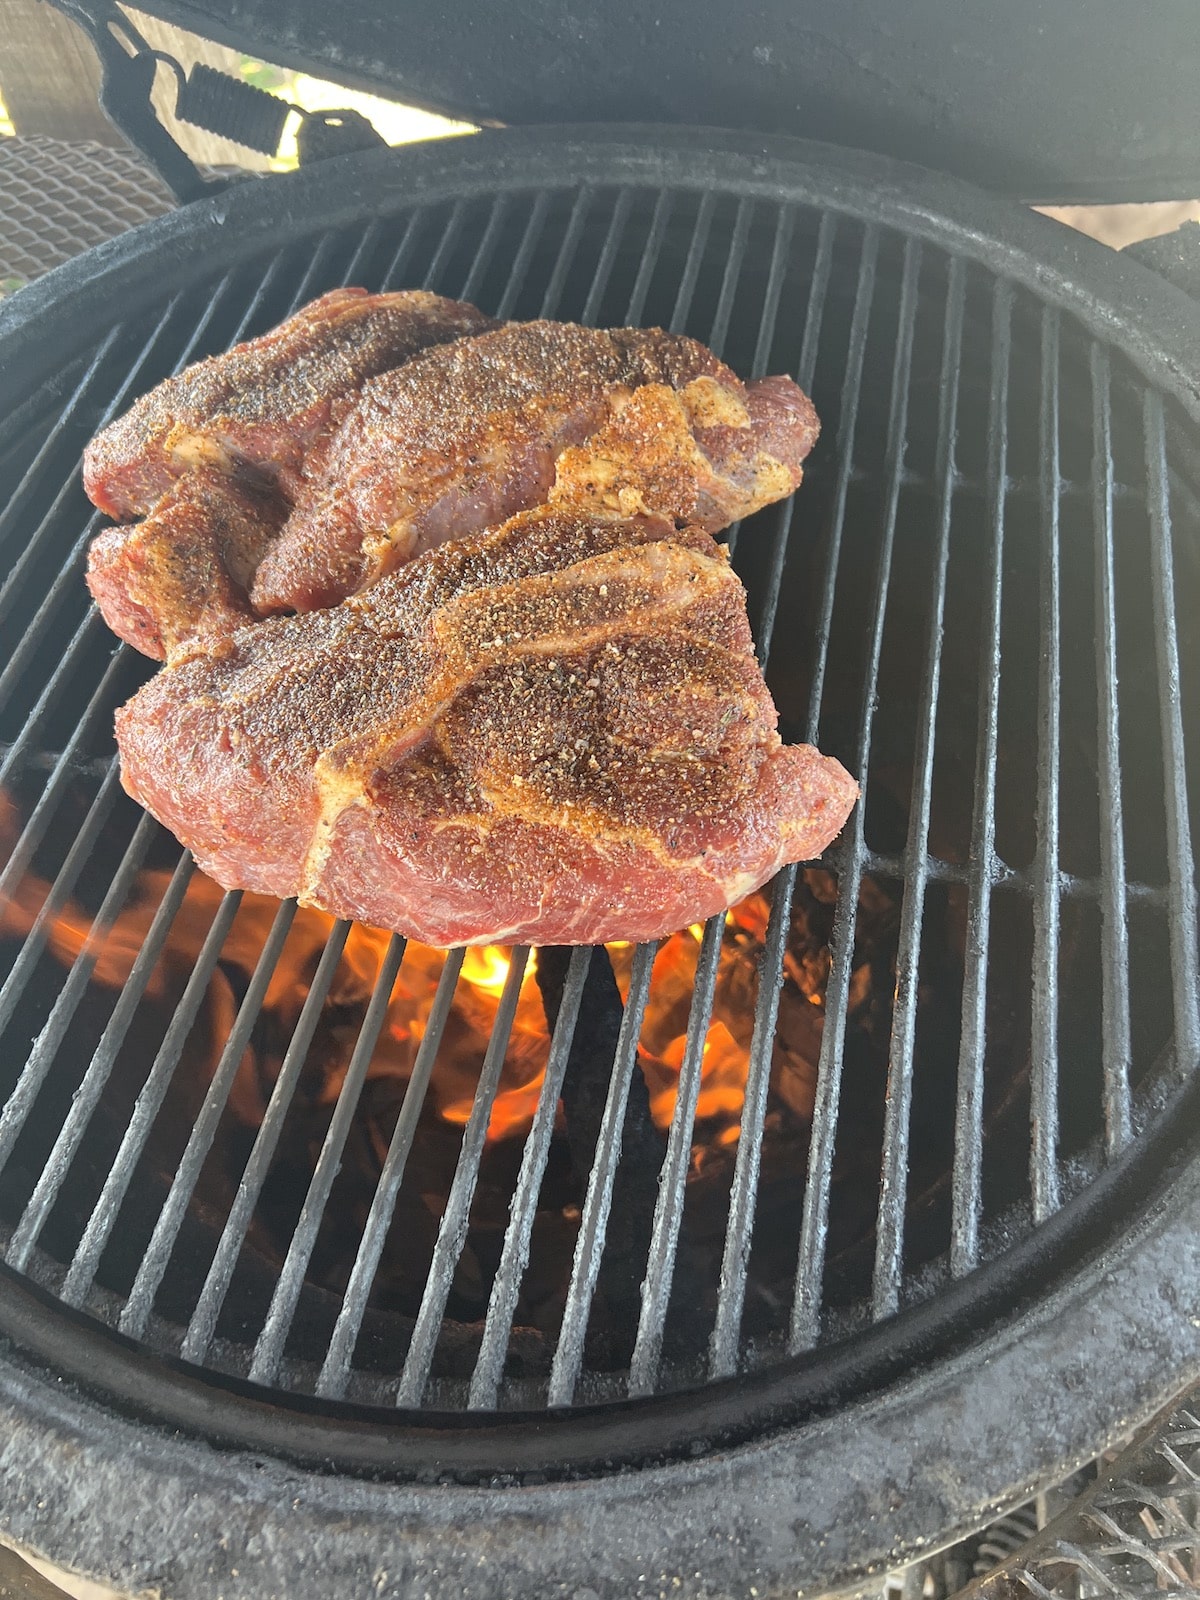 Chuck roast on a grill.